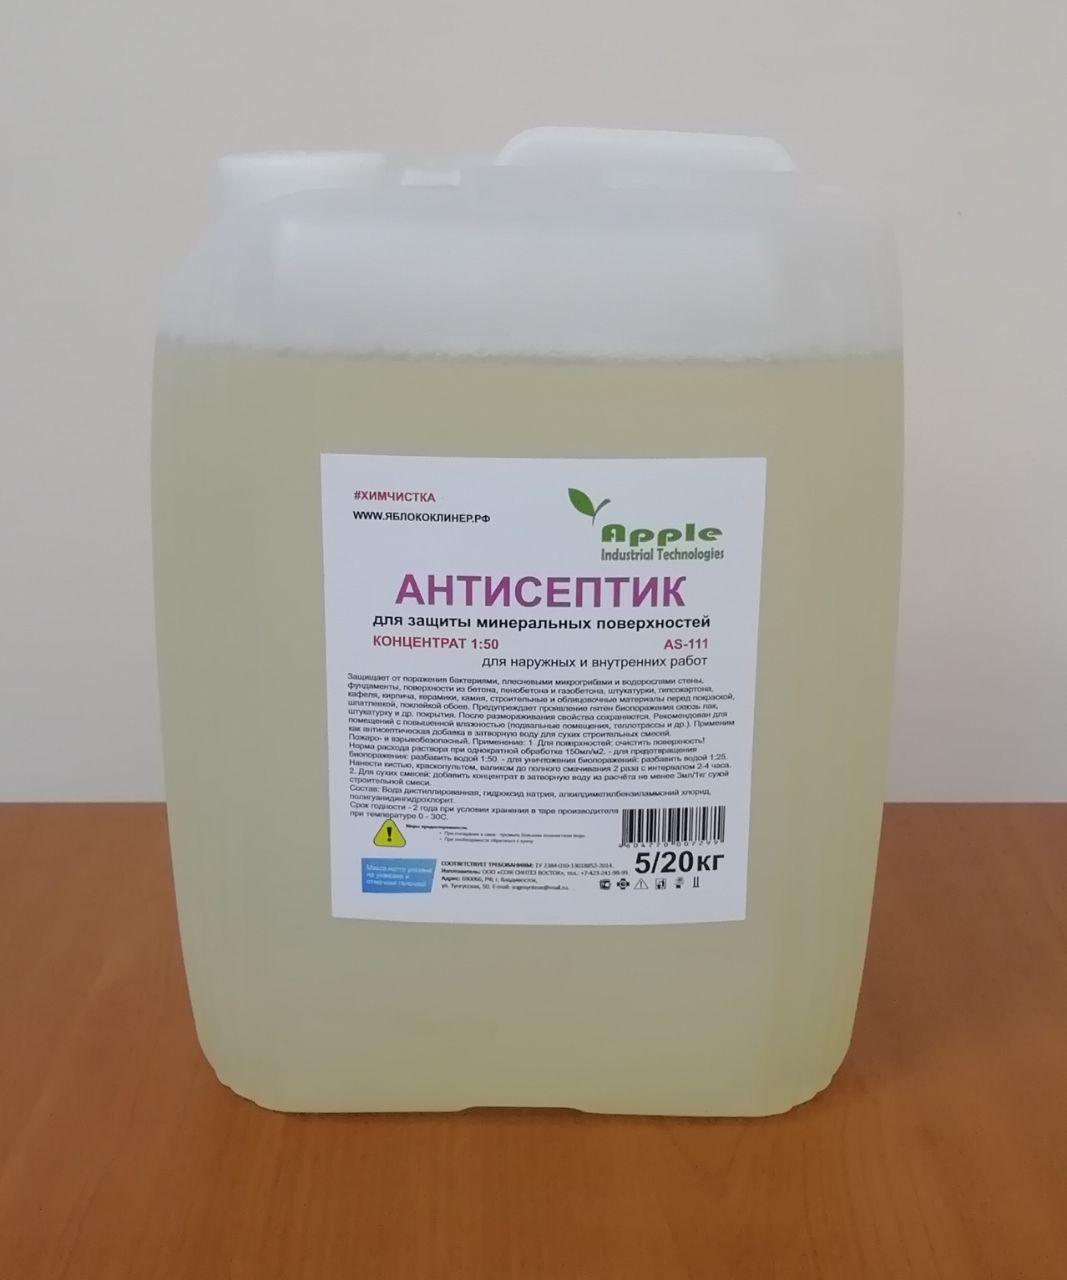 Antiseptik-5kg_5